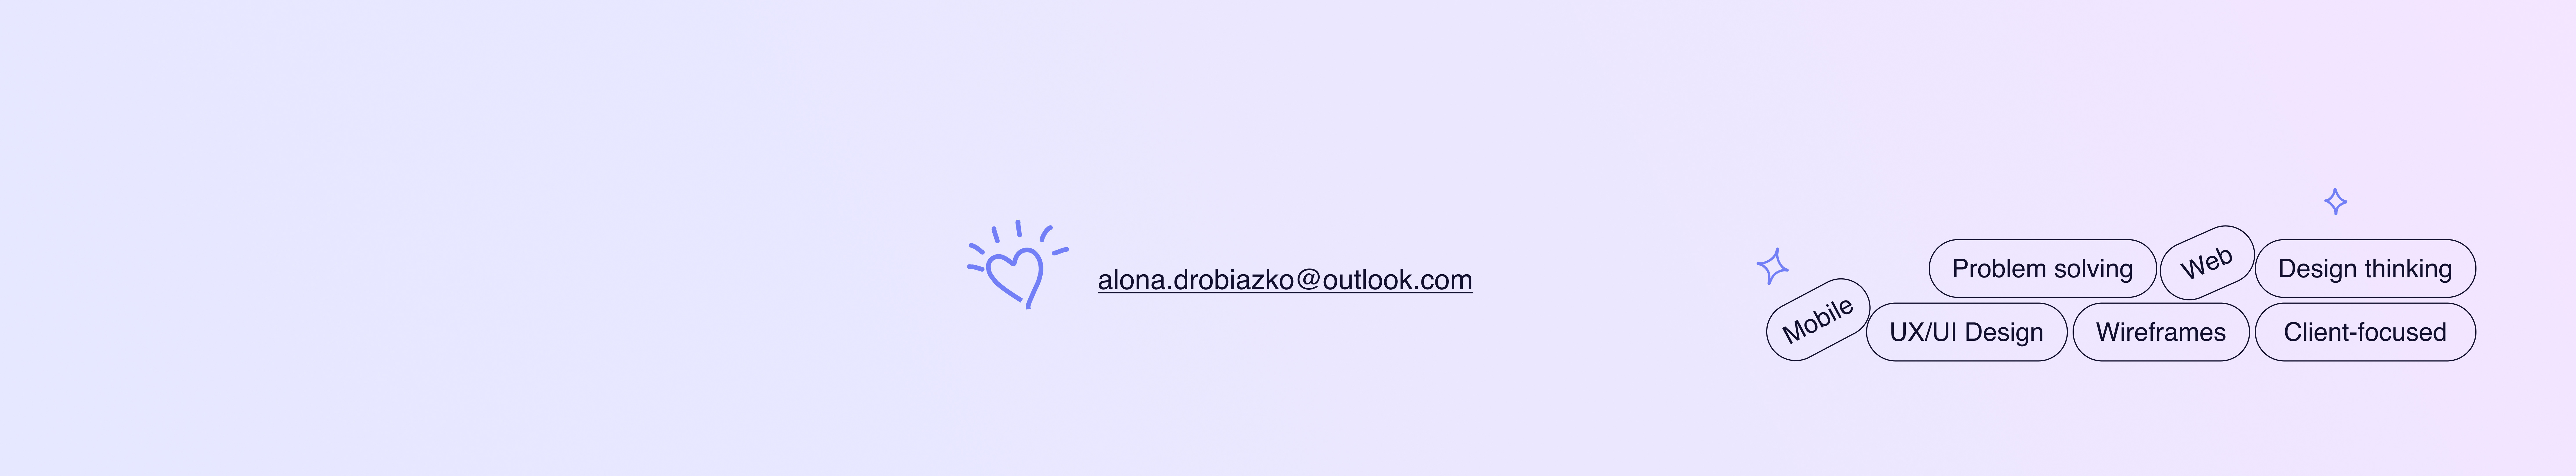 Alona Drobiazkos profilbanner